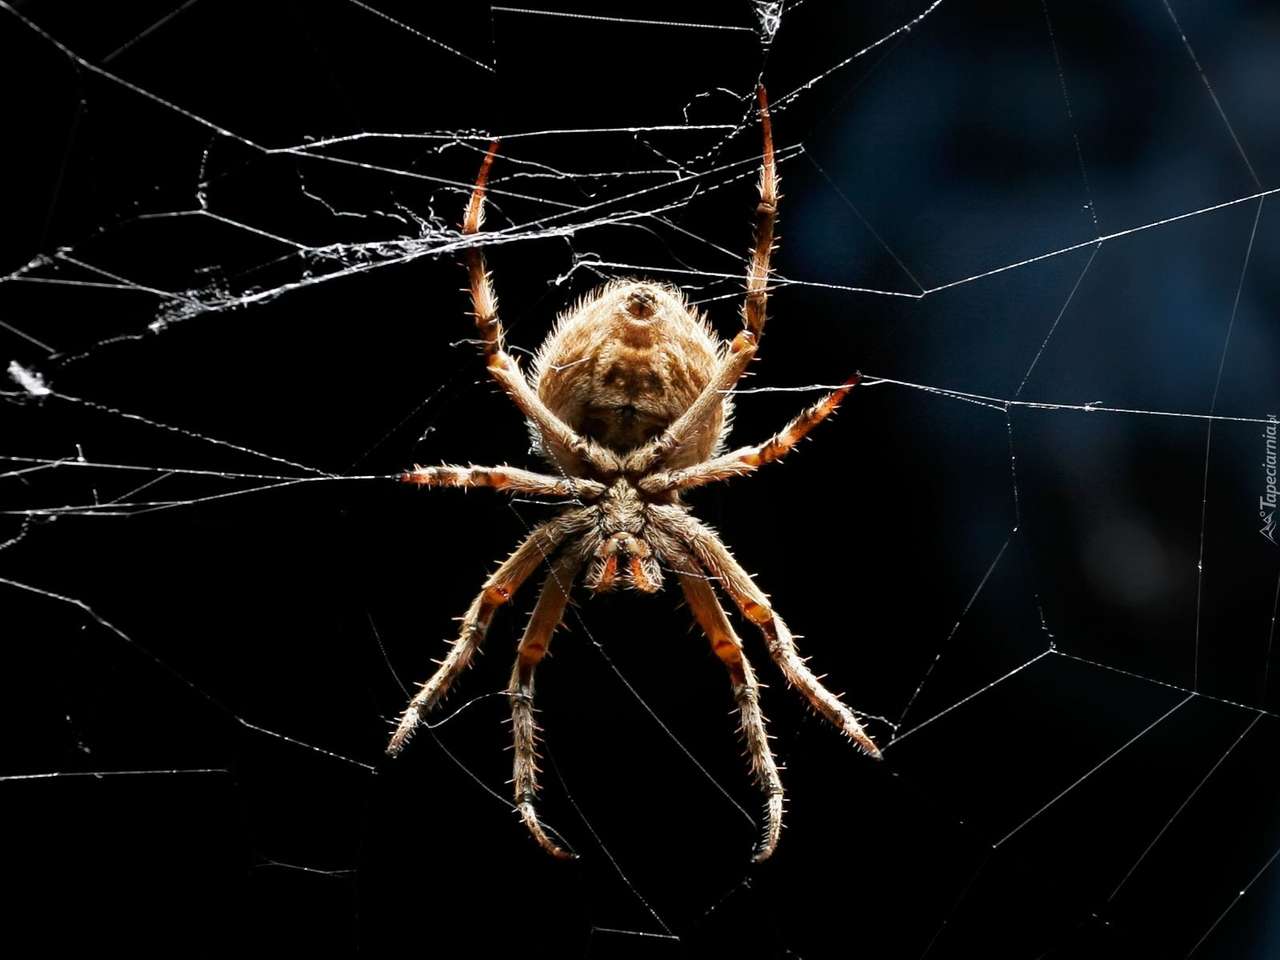 павук-головоломка онлайн пазл